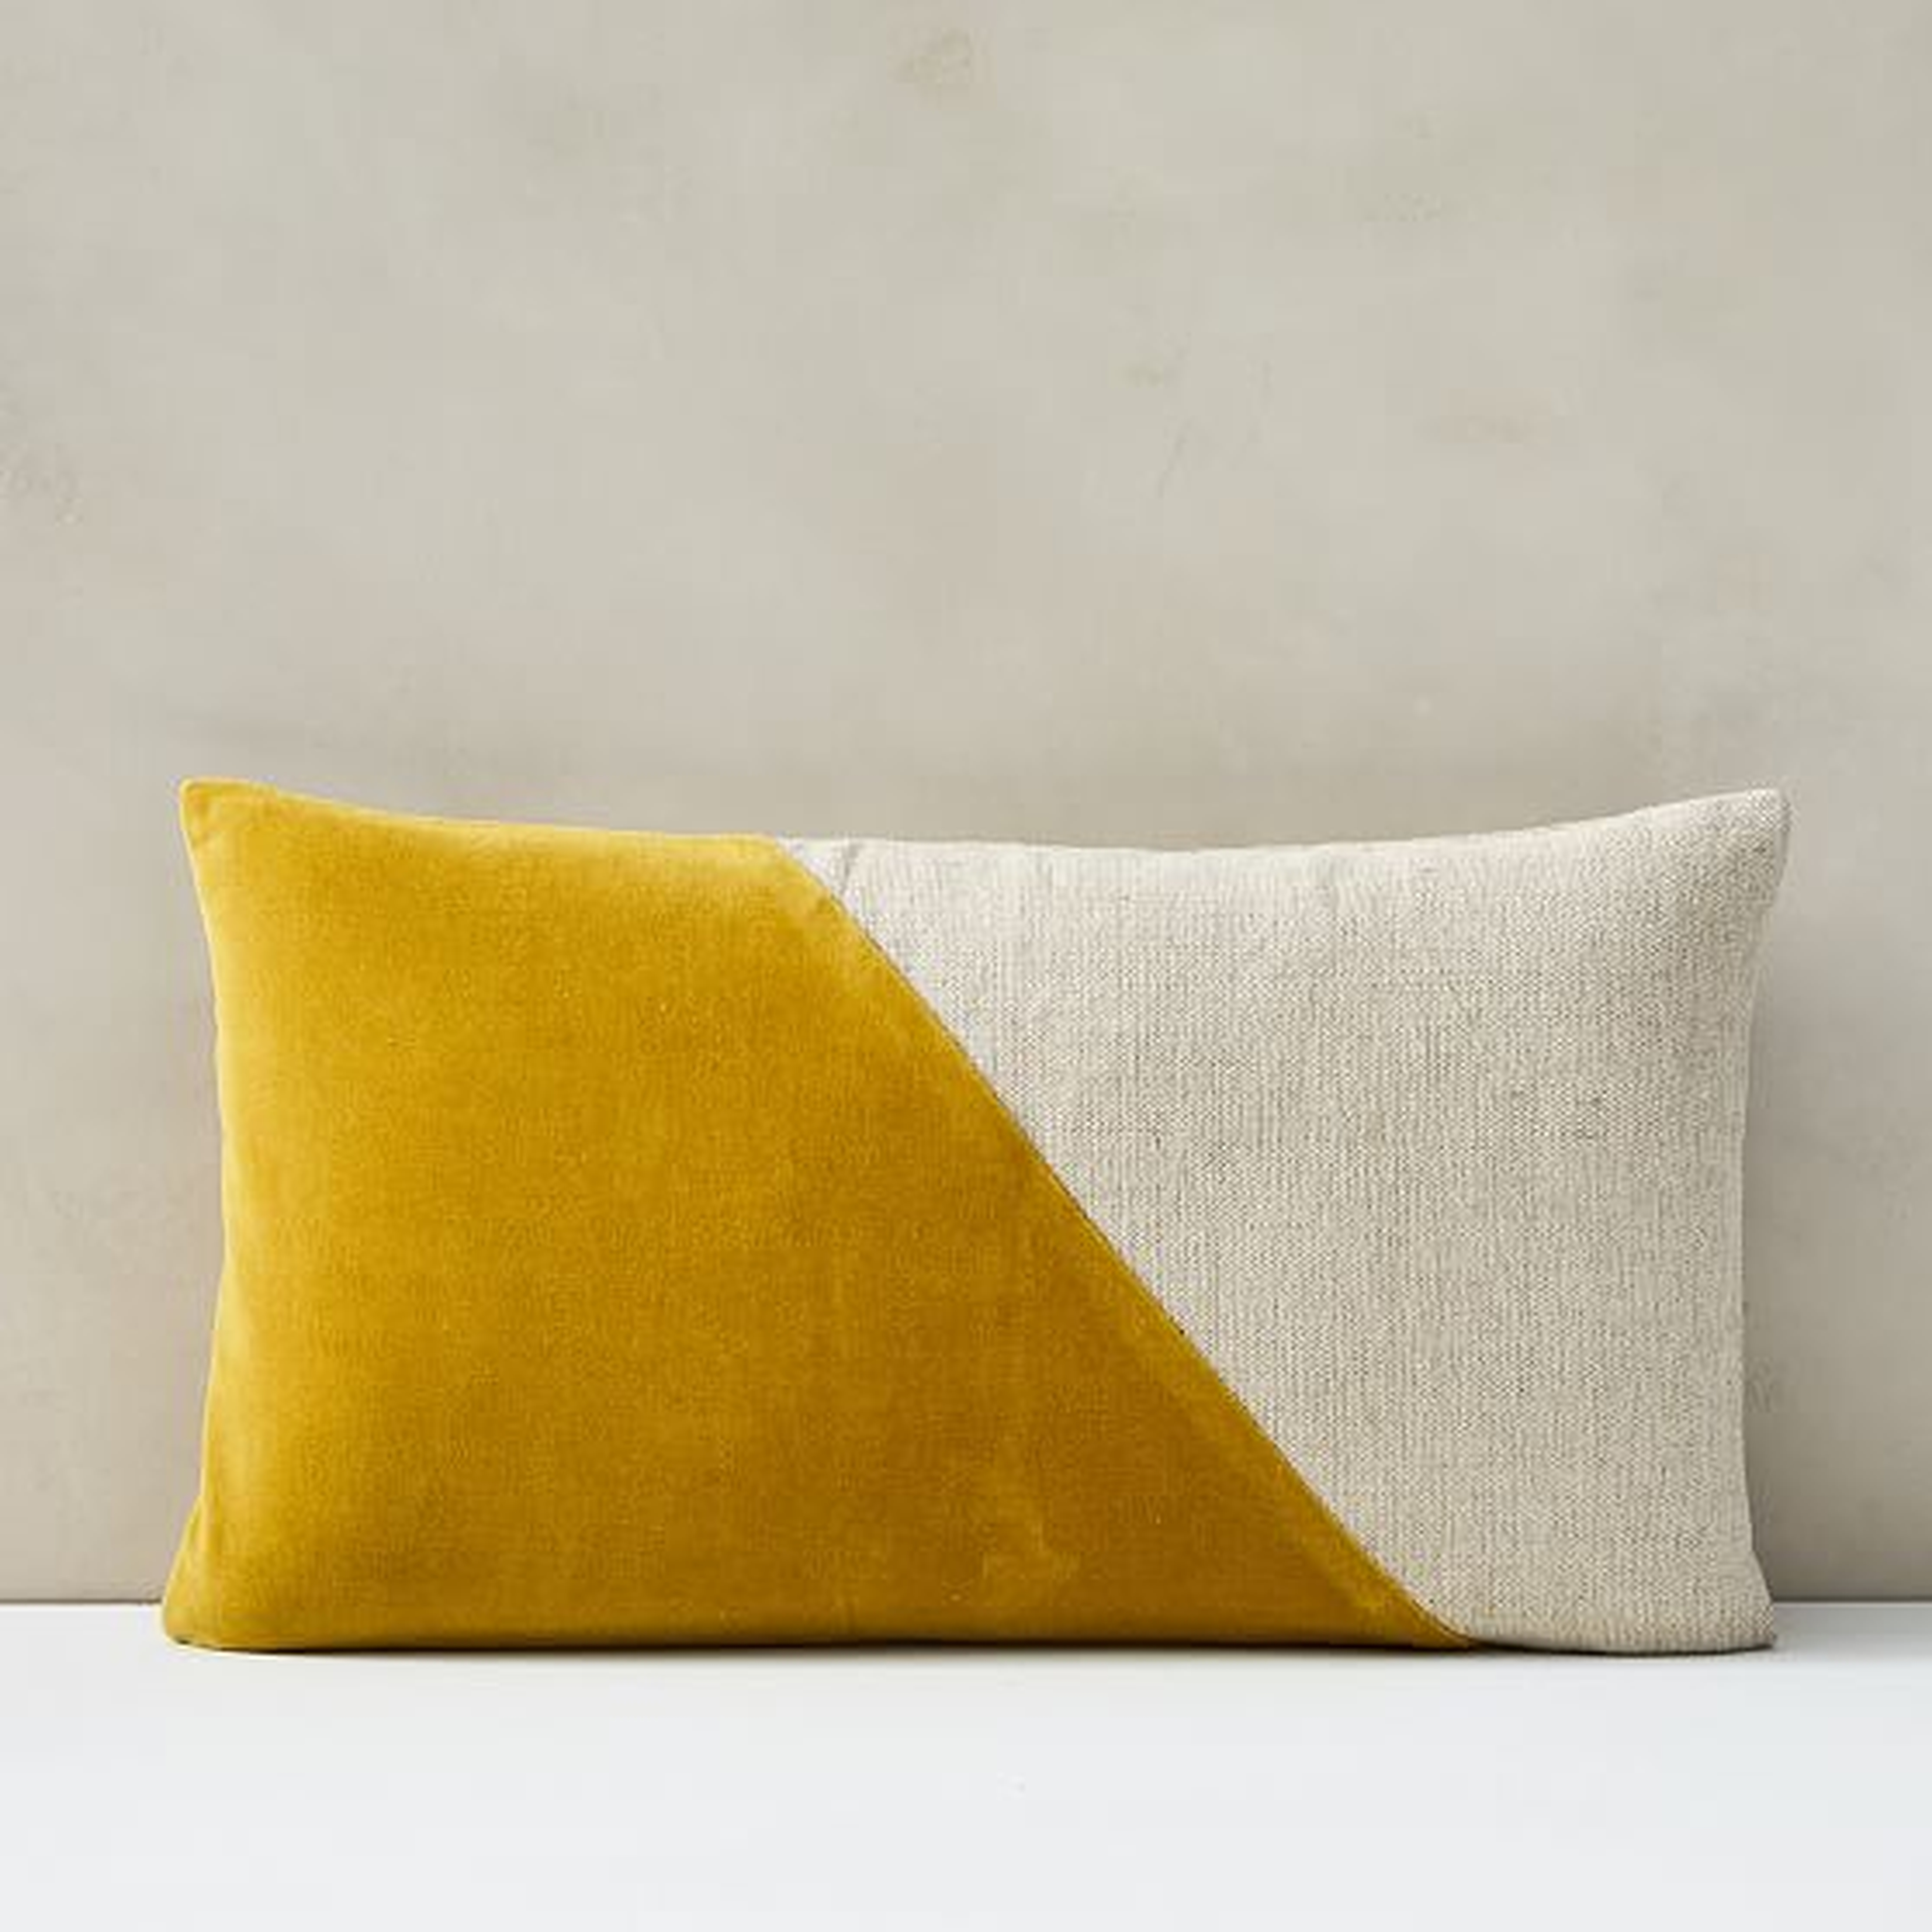 Cotton Linen + Velvet Lumbar Pillow Cover with Down Insert, Dark Horseradish, 12"x21" - West Elm